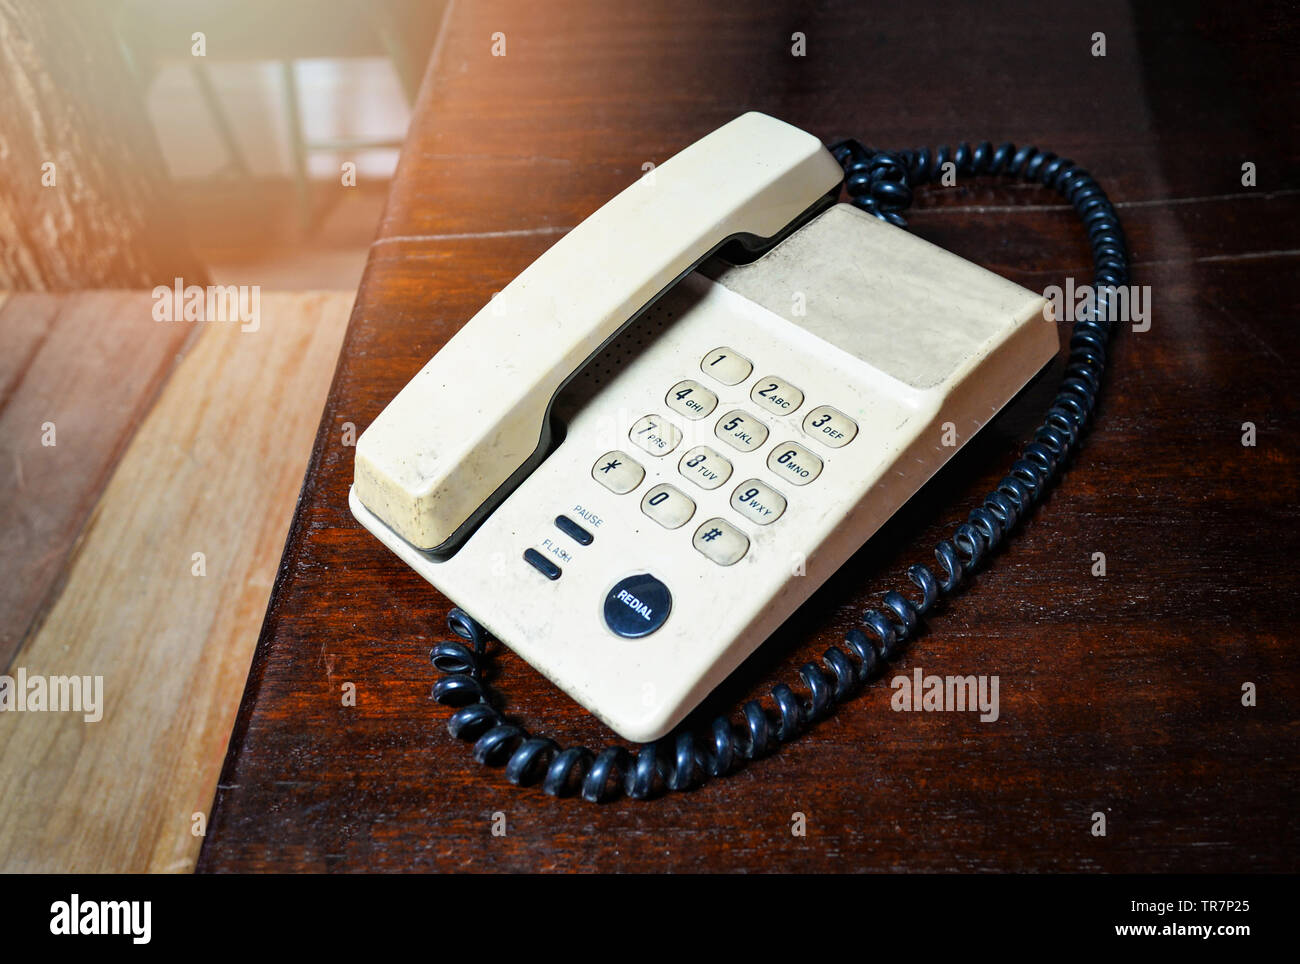 File:Telefono antiguo.JPG - Wikimedia Commons